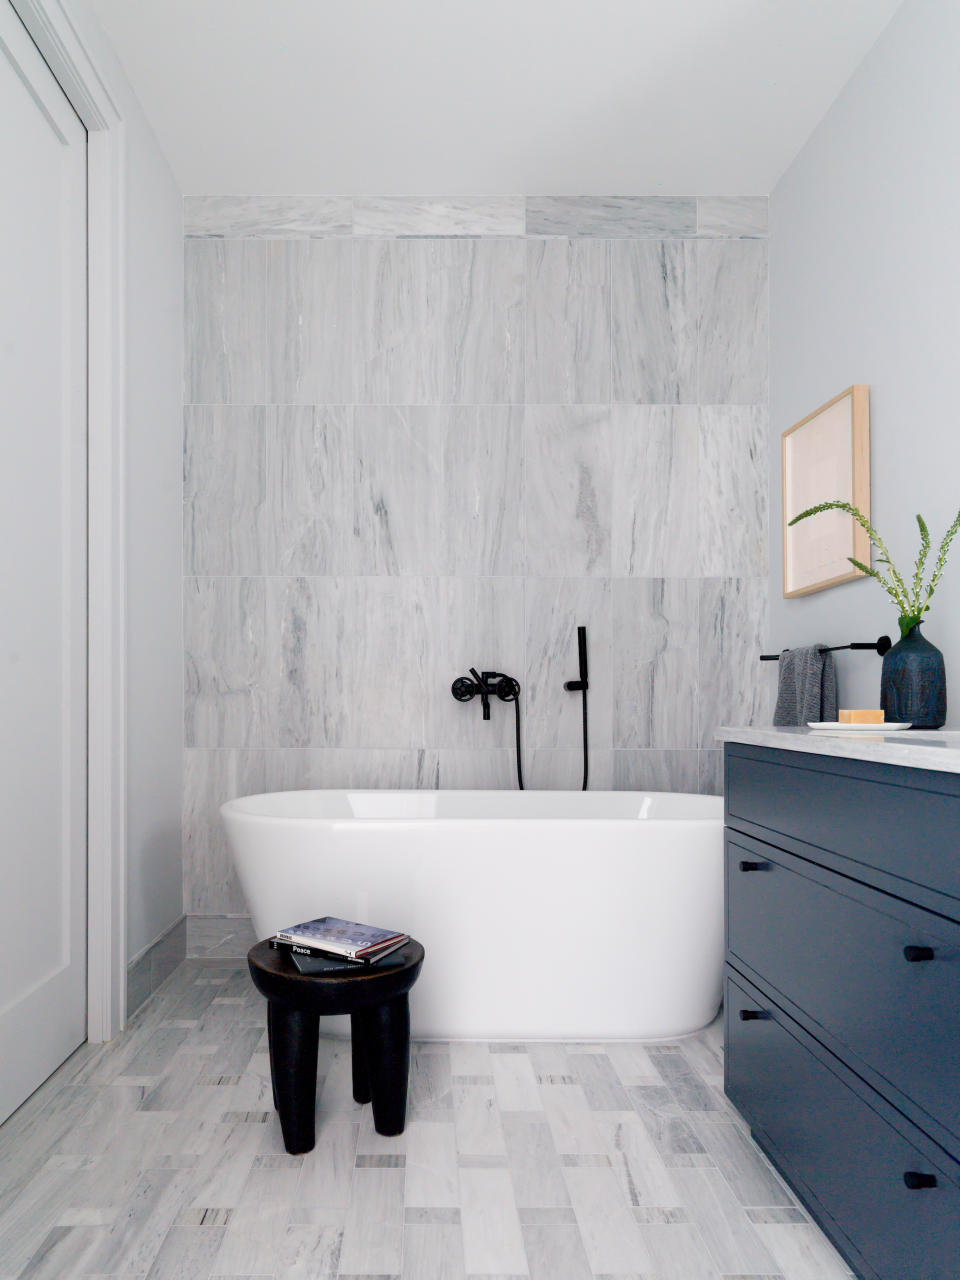 2. Create a focal point with a dark gray bathroom vanity